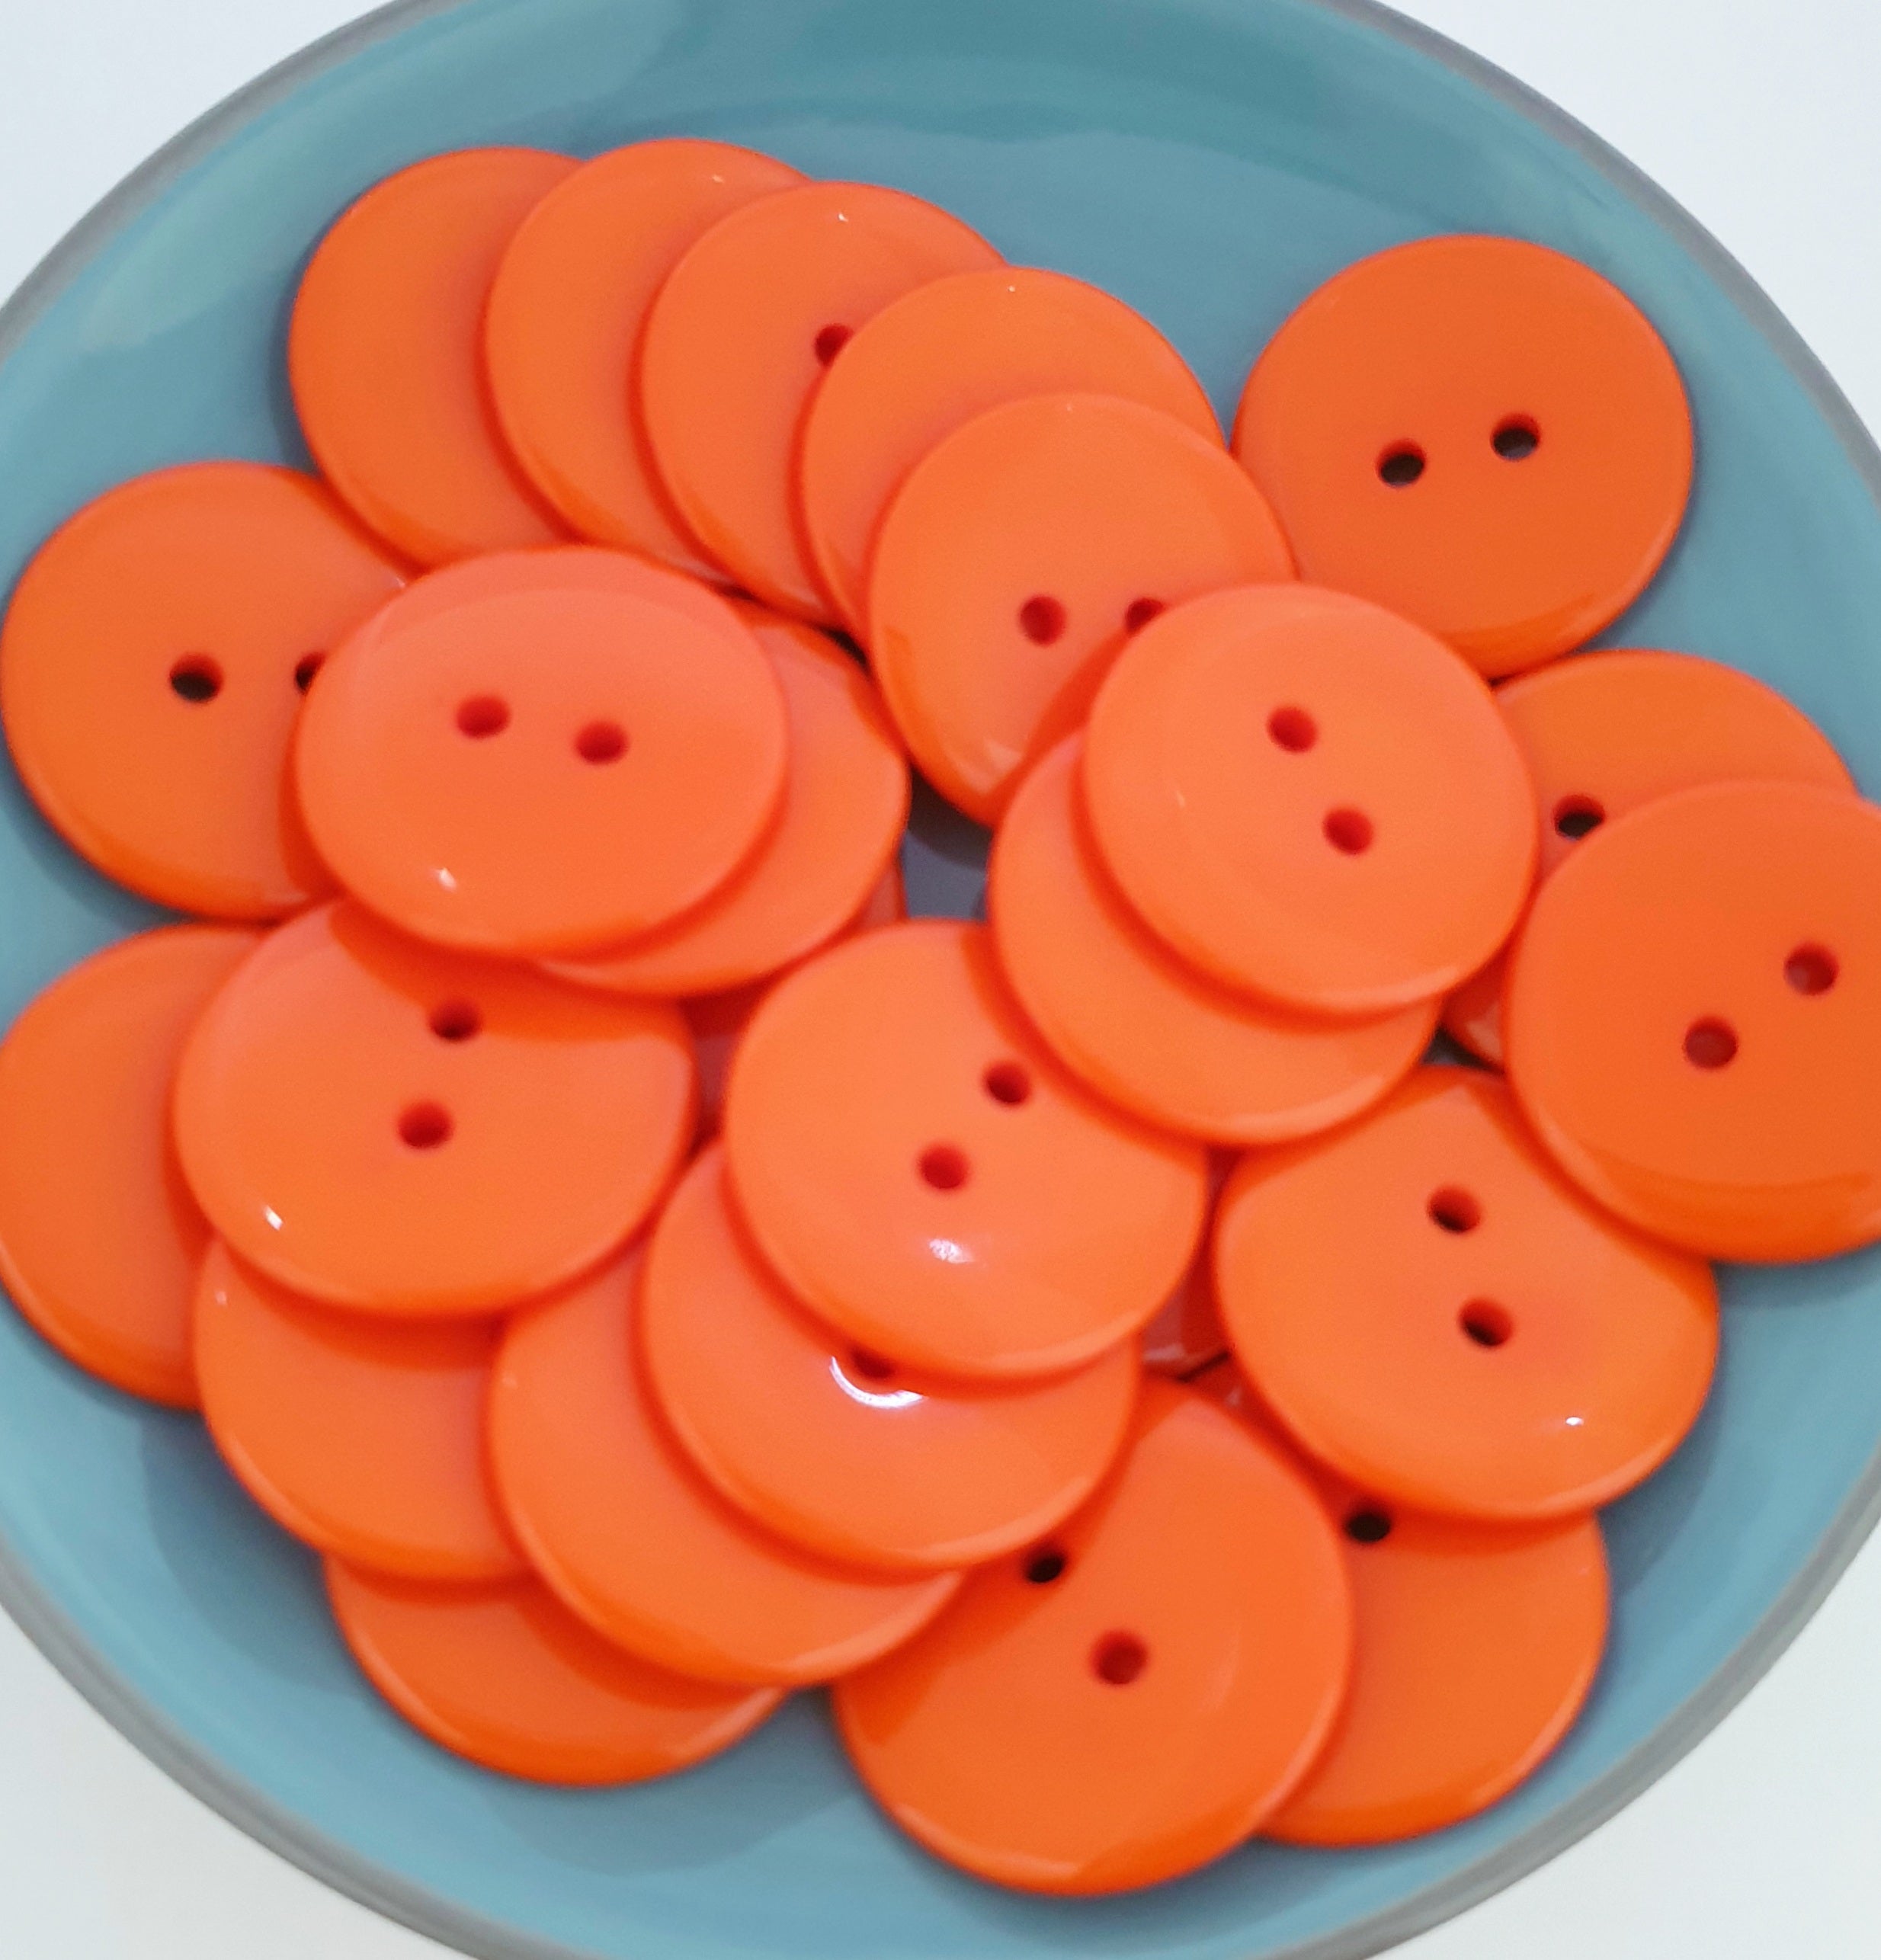 MajorCrafts 36pcs 23mm Orange 2 Holes Round Large Resin Sewing Buttons